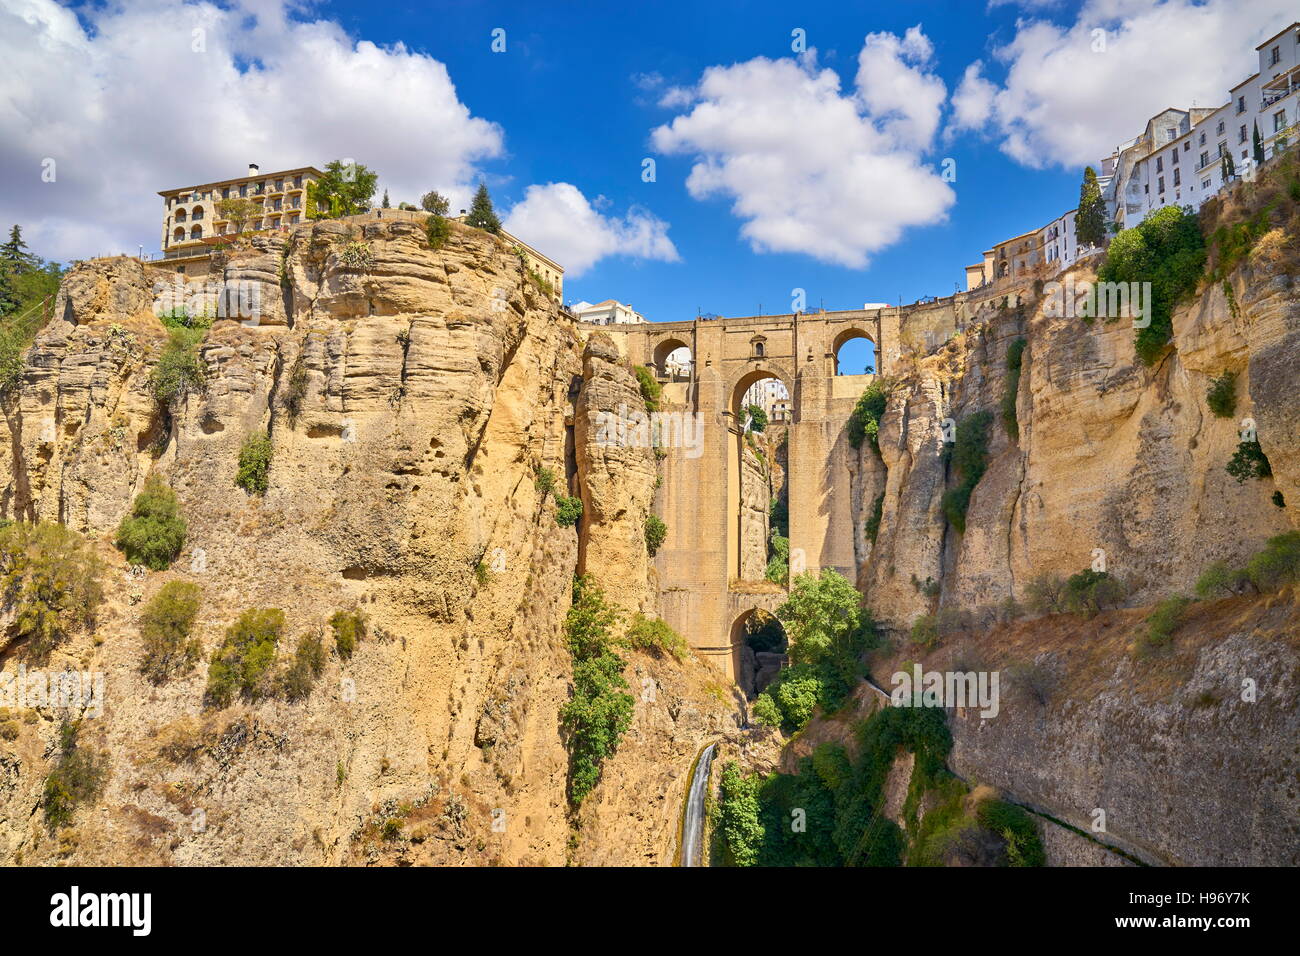 Ronda - El Tajo Gorge Canyon, Puente Nuevo Bridge, Andalusia, Spain Stock Photo